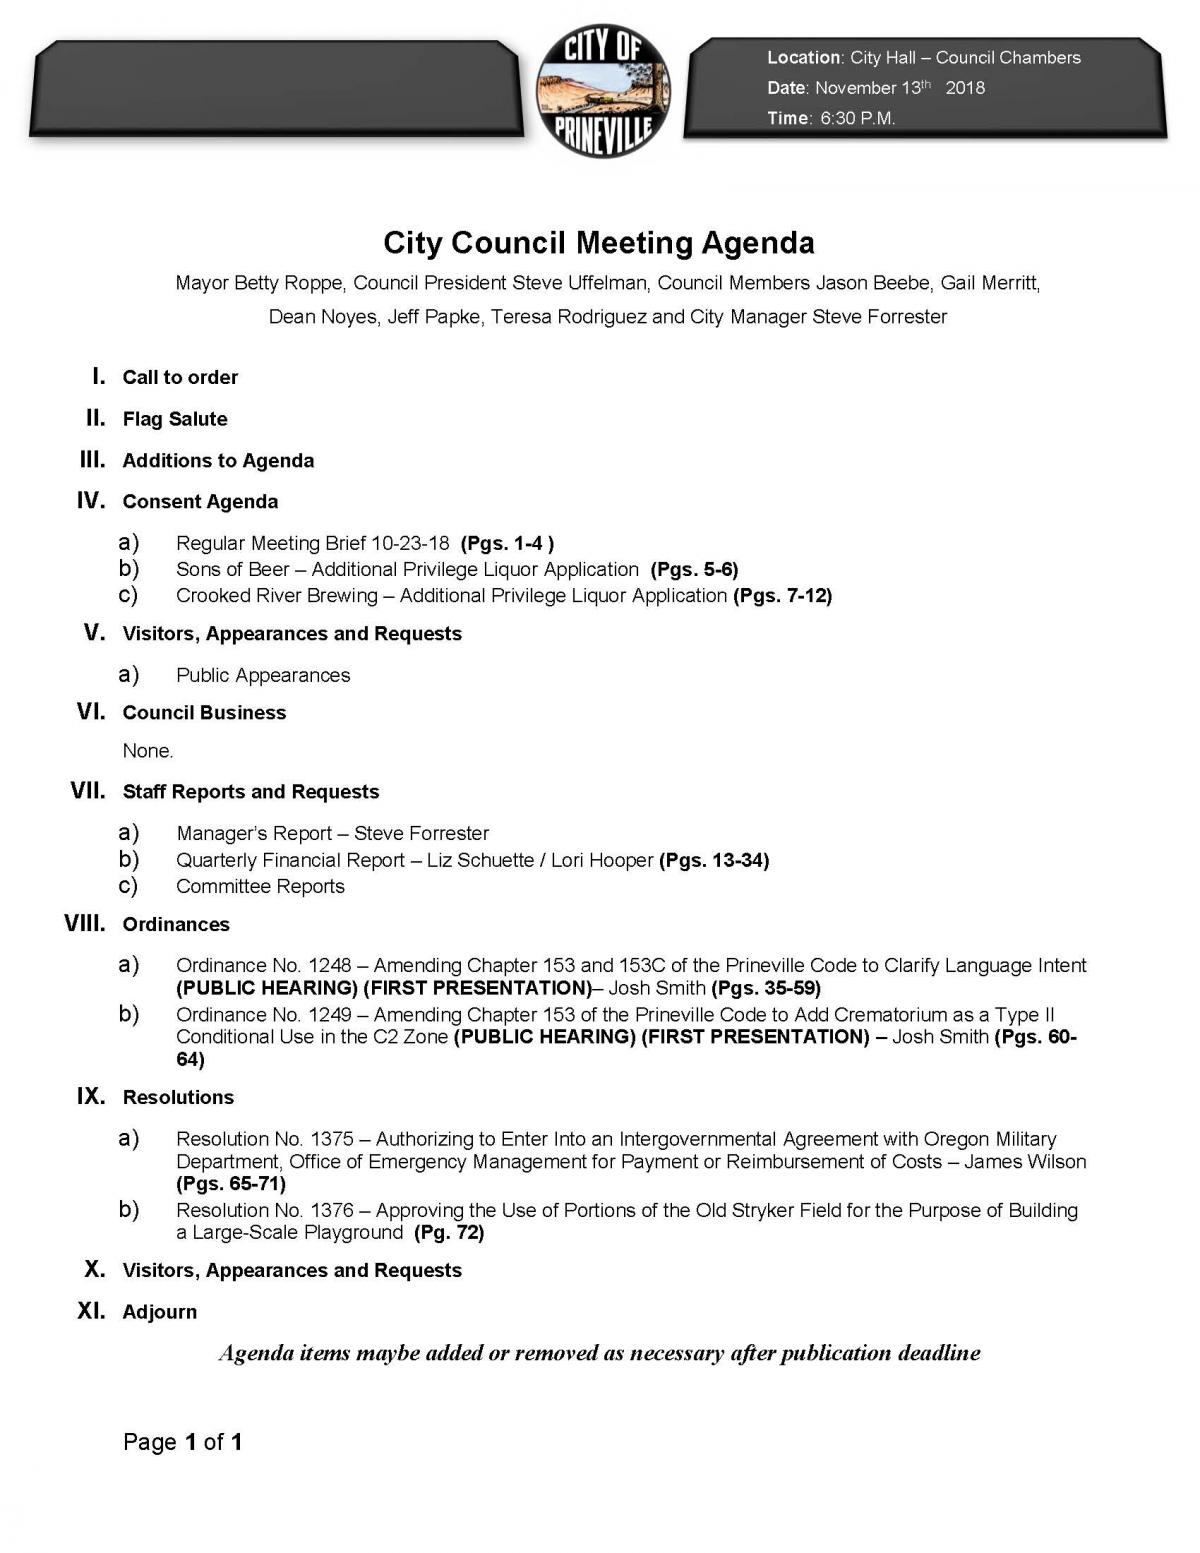 Council Agenda 11-13-18